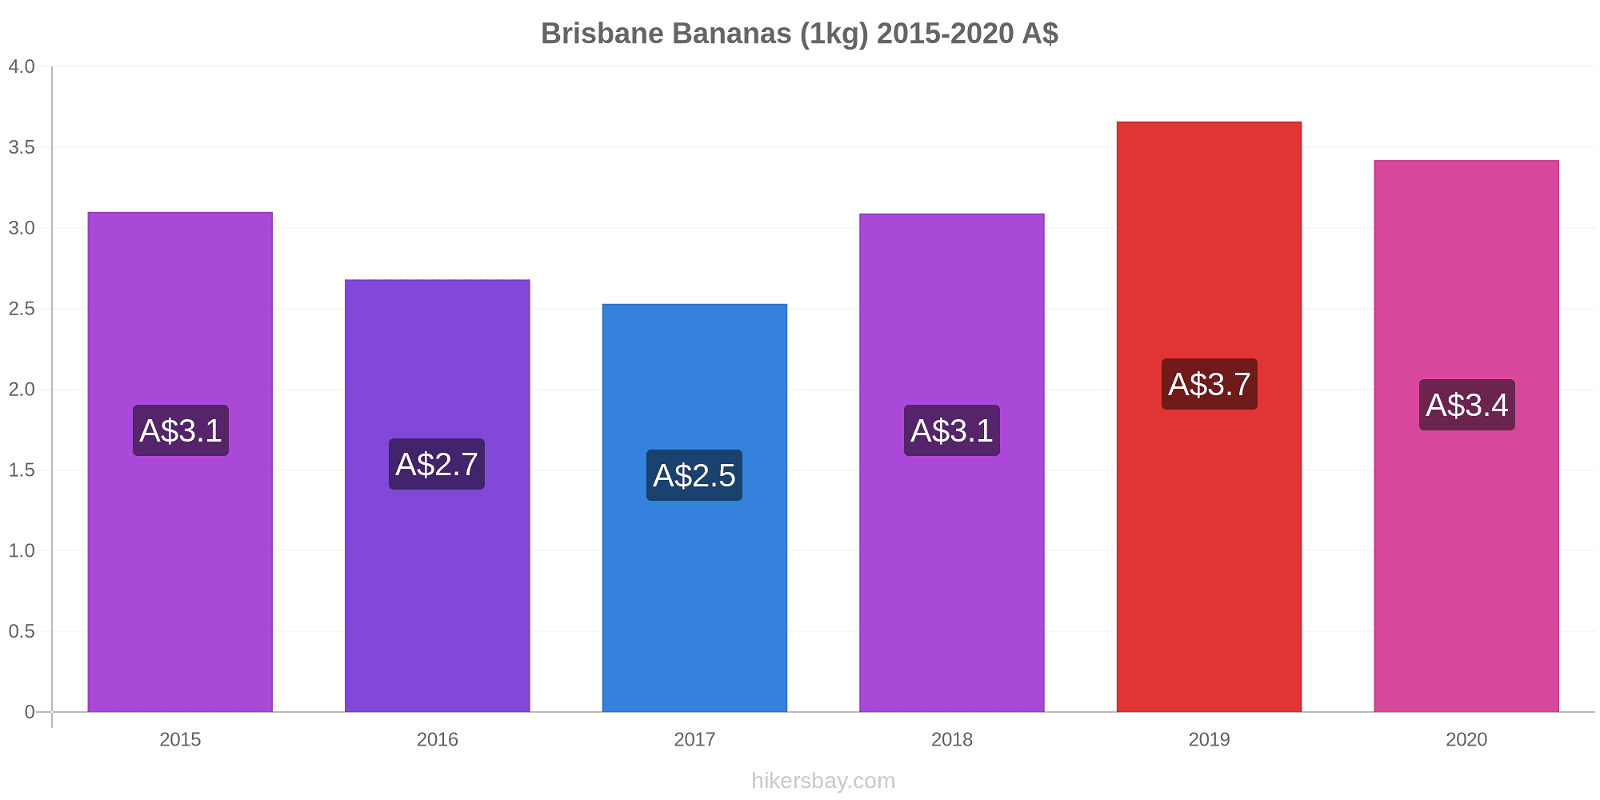 Brisbane price changes Bananas (1kg) hikersbay.com